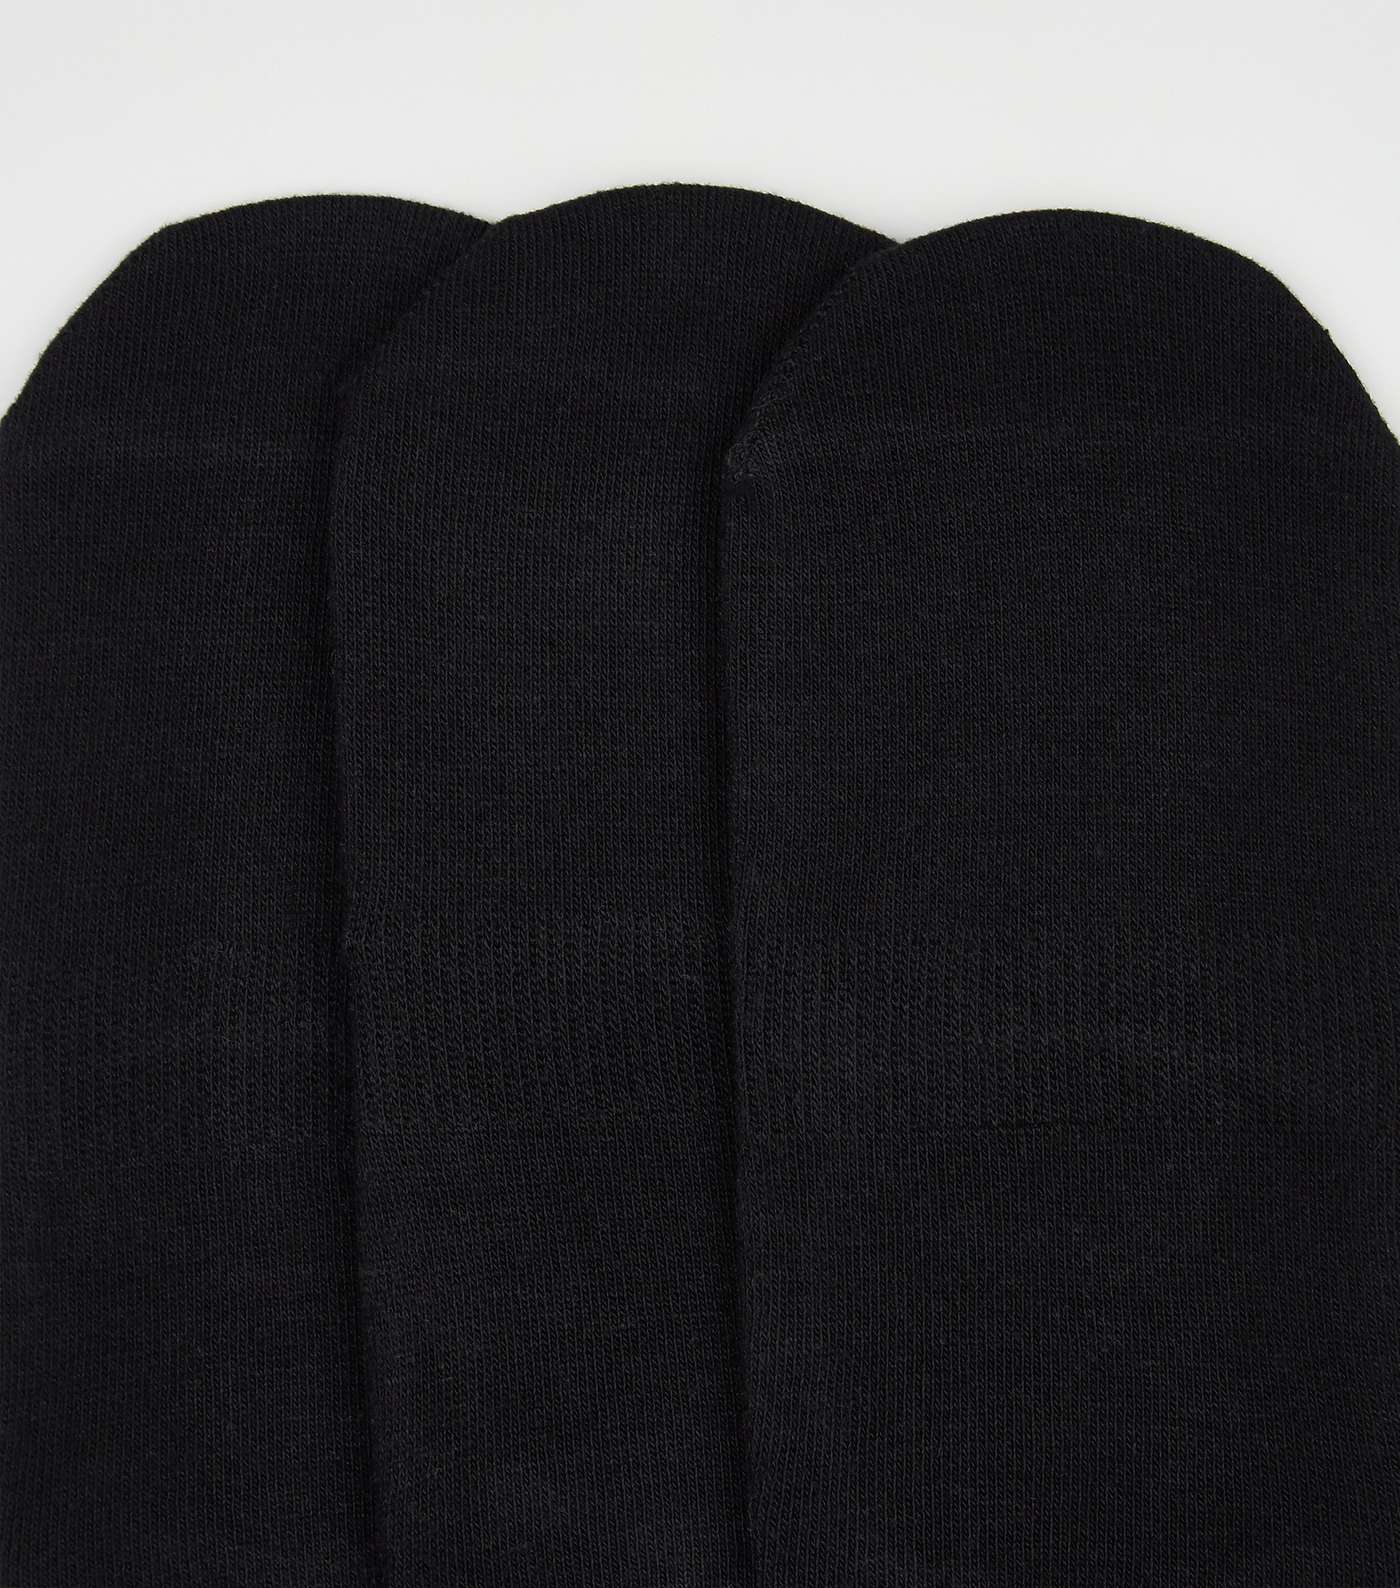 3 Pack Black Invisible Socks Image 3